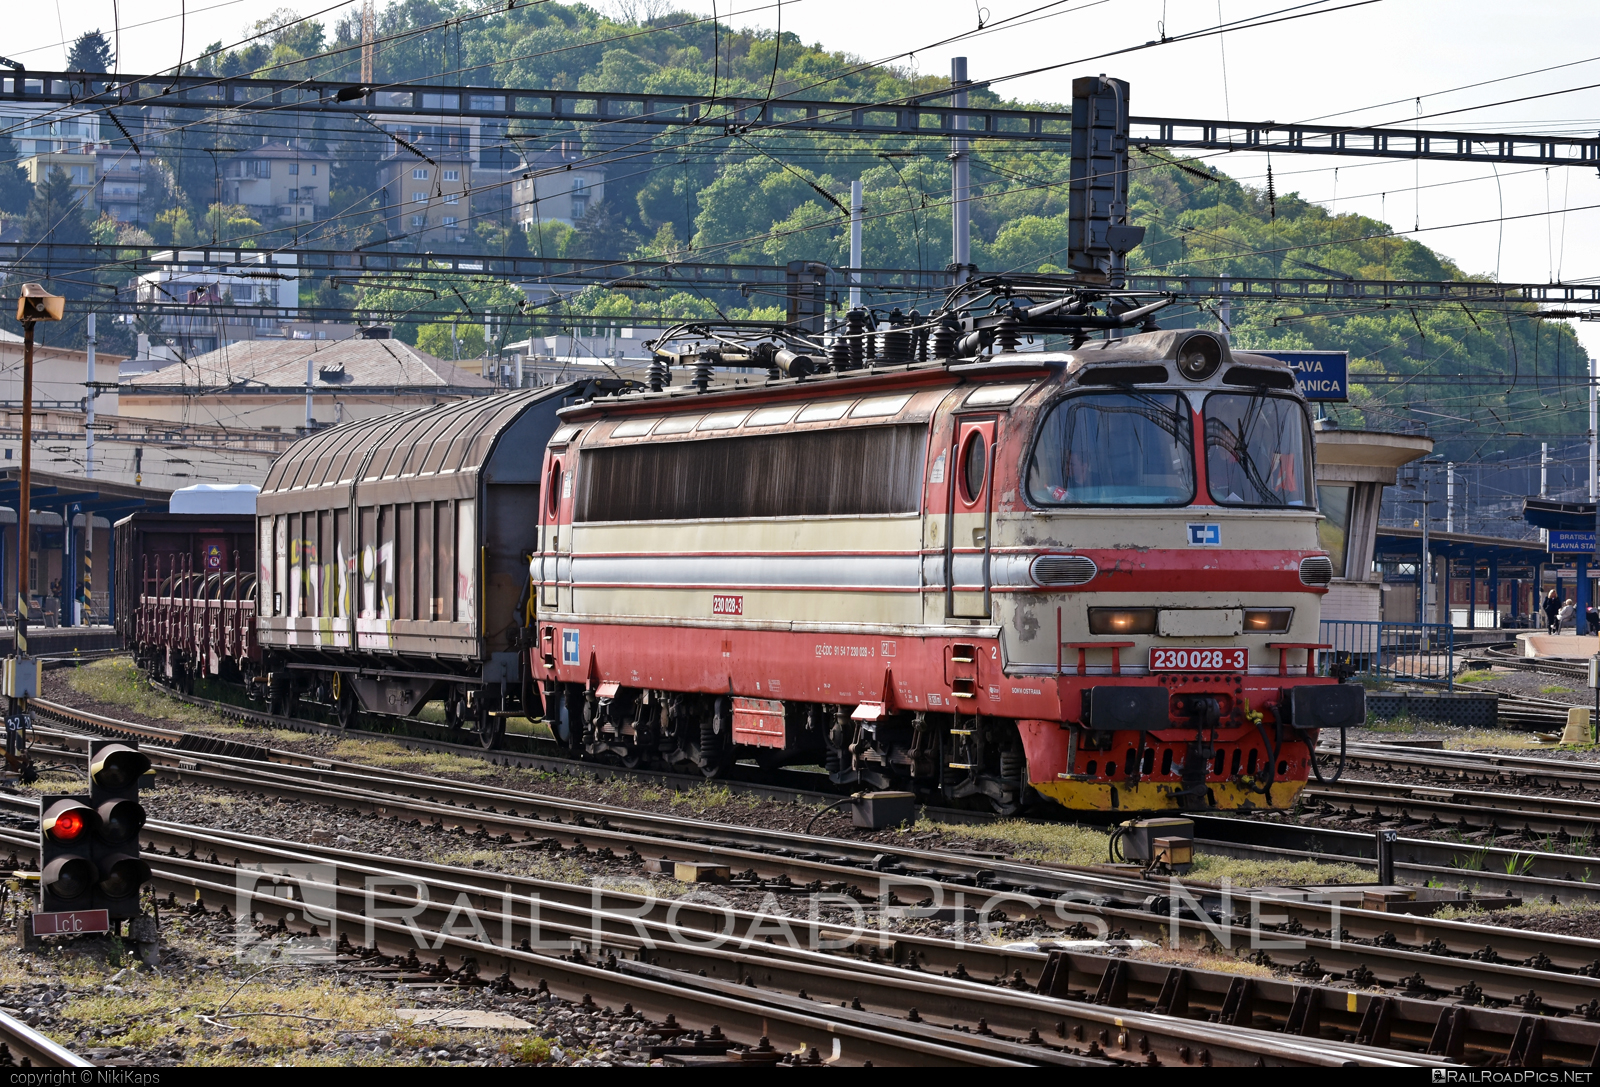 Škoda 47E - 230 028-3 operated by ČD Cargo, a.s. #cdcargo #laminatka #locomotive240 #mixofcargo #skoda #skoda47e